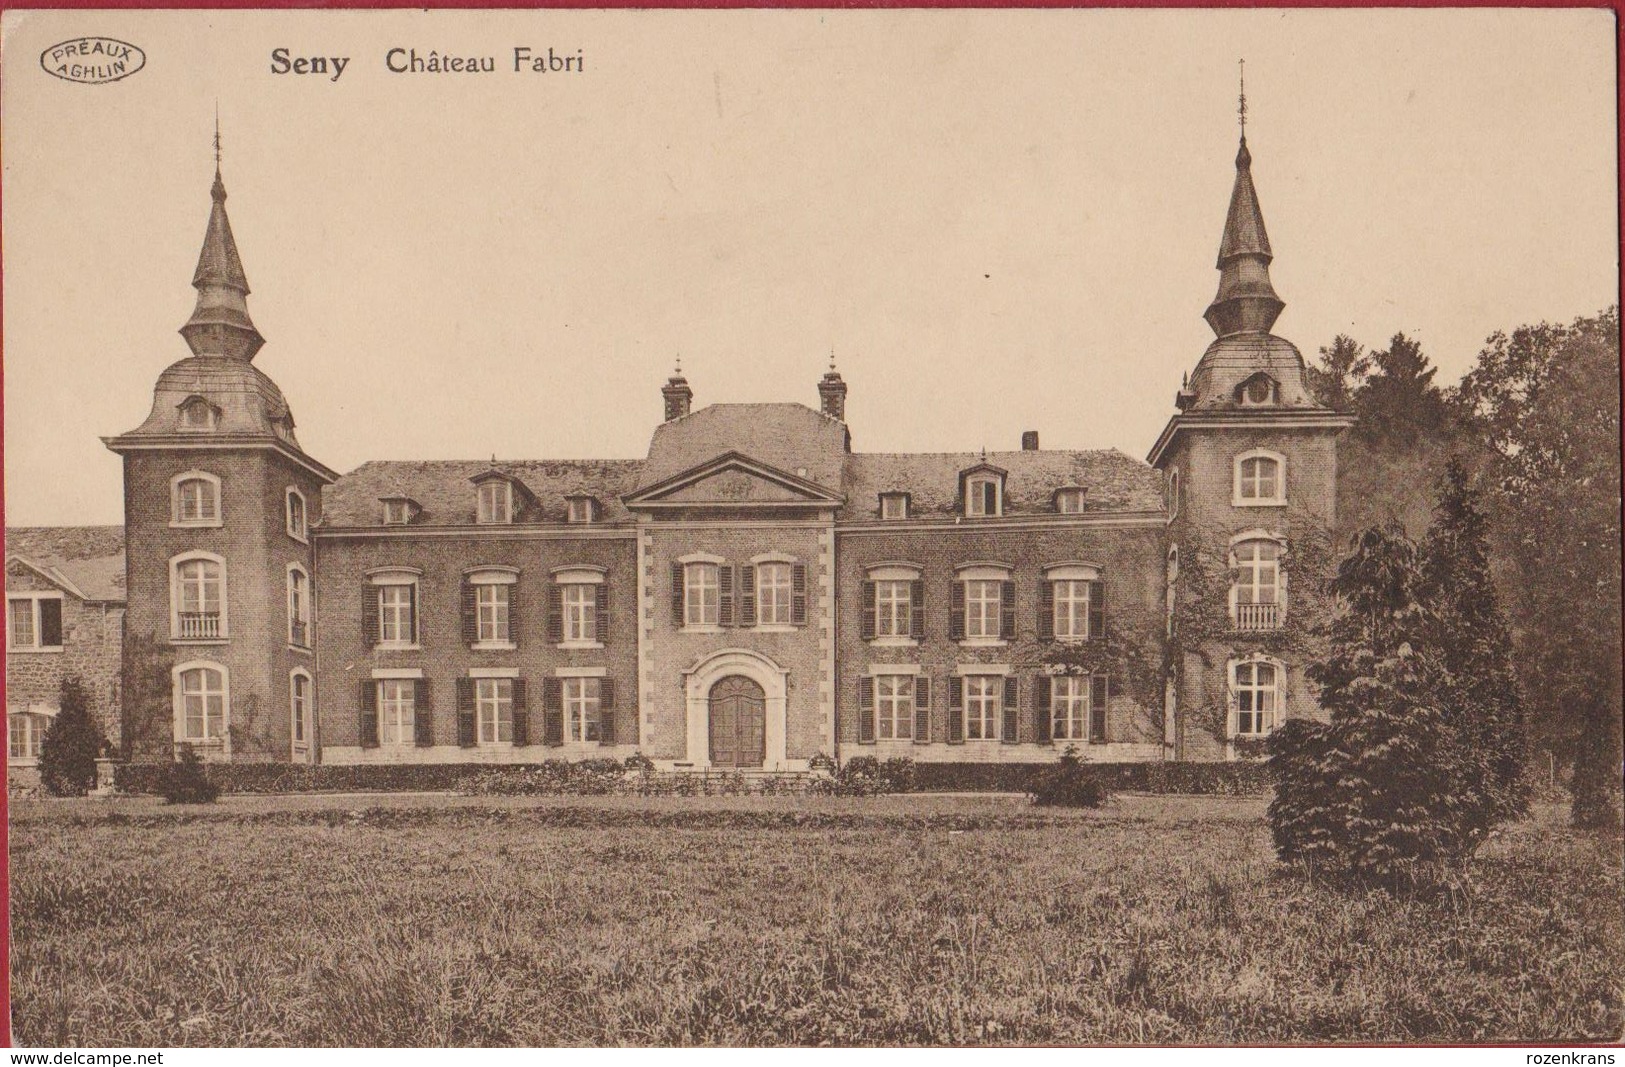 Seny Chateau Fabri Condroz Tinlot CPA (En Très Bon Etat) - Tinlot